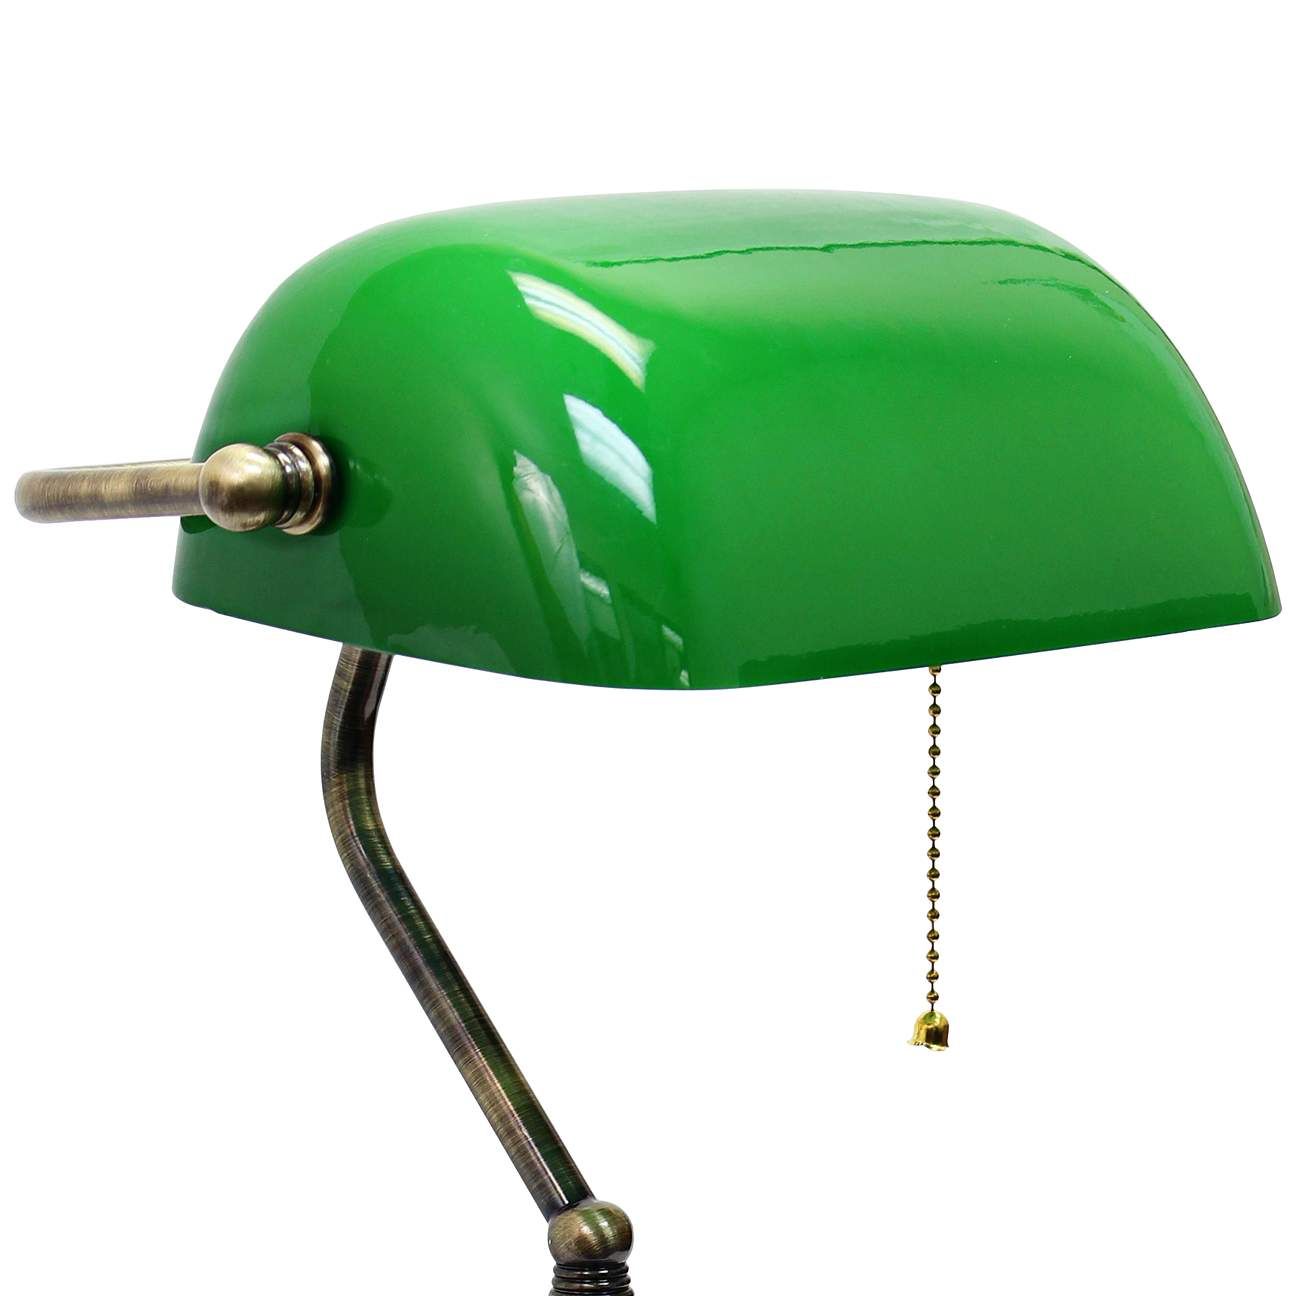 Locust Antique Nickel and Green Glass Banker's Desk Lamp | Lamps Plus